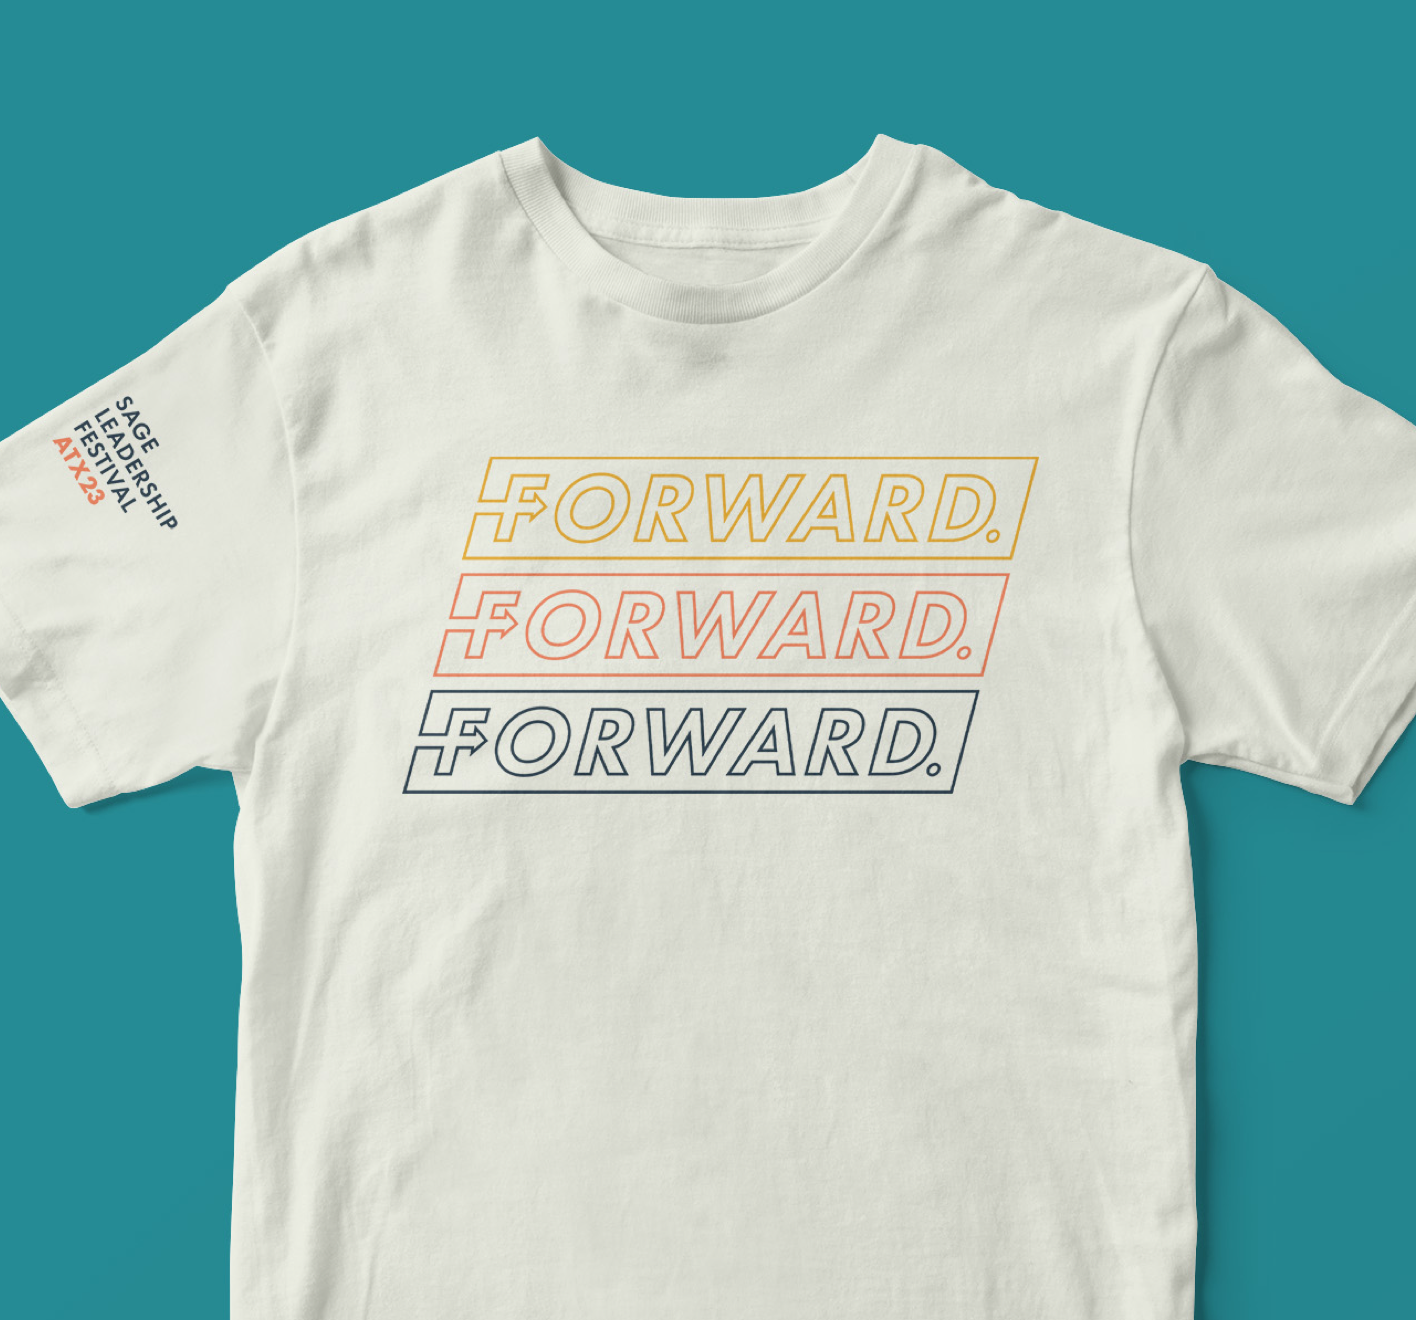 Forward leadership tshirt mockup design